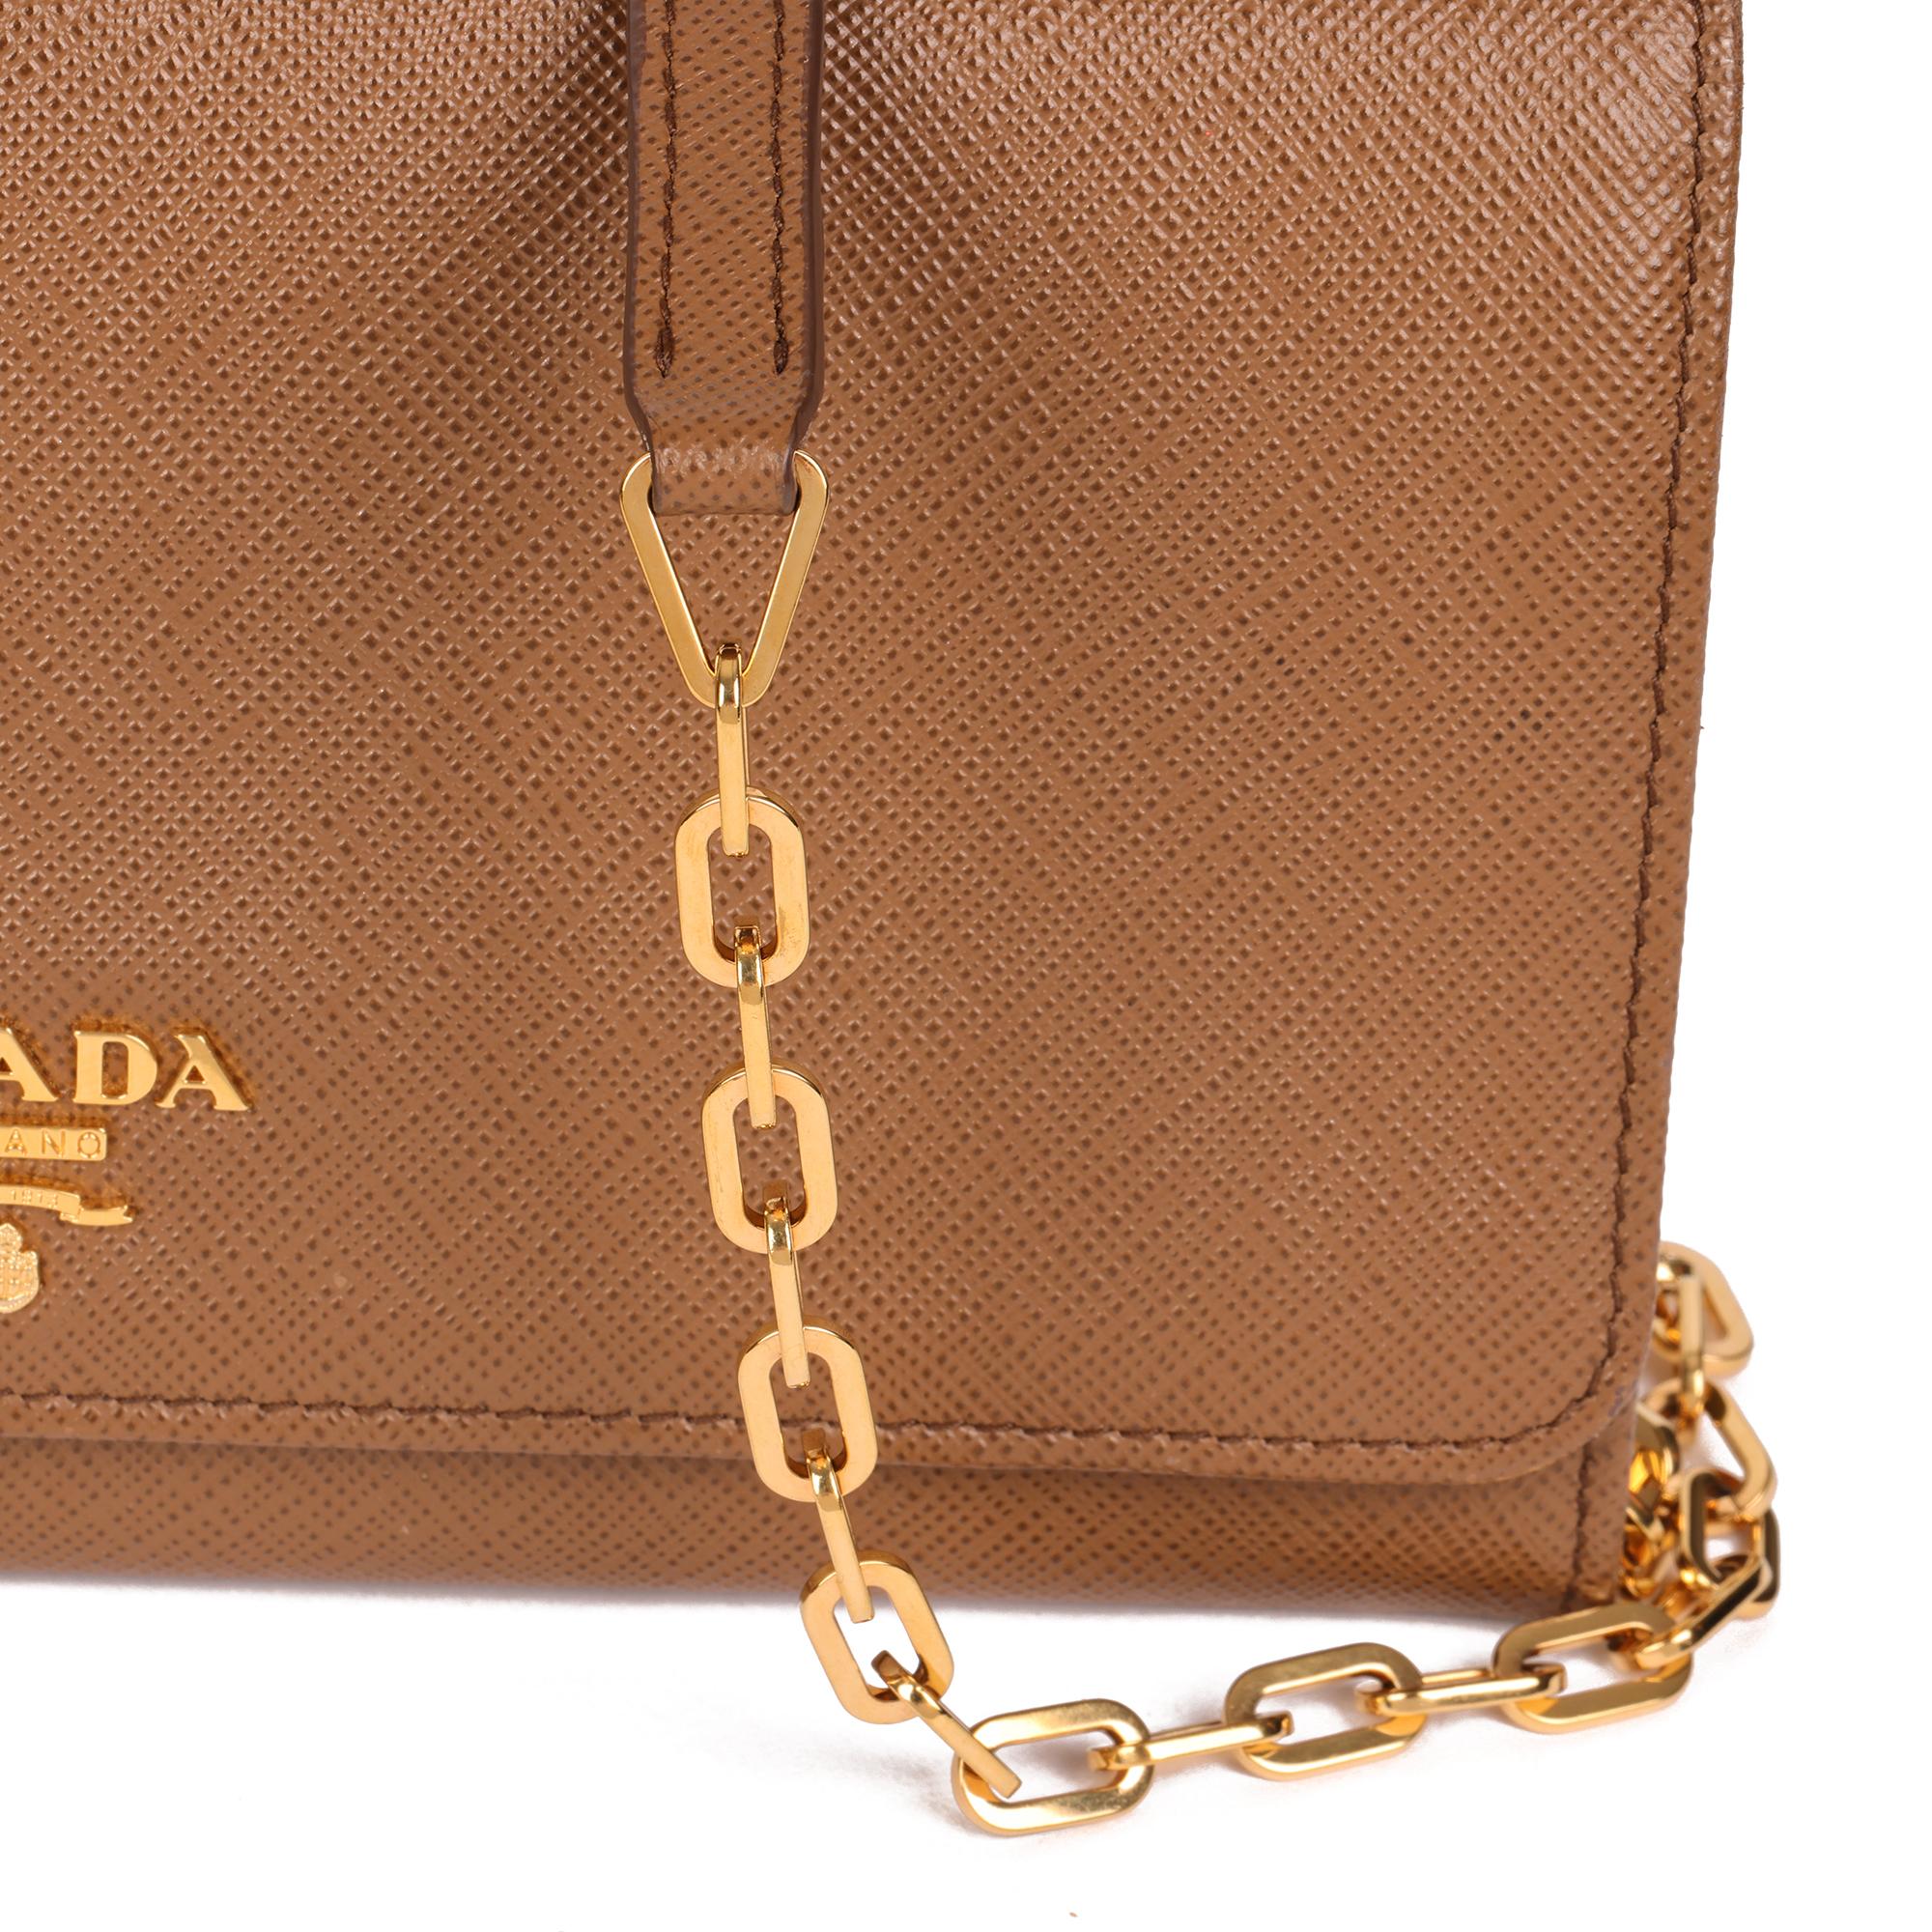 PRADA Cannella Brown Saffiano Leather Wallet-on-Chain WOC 1